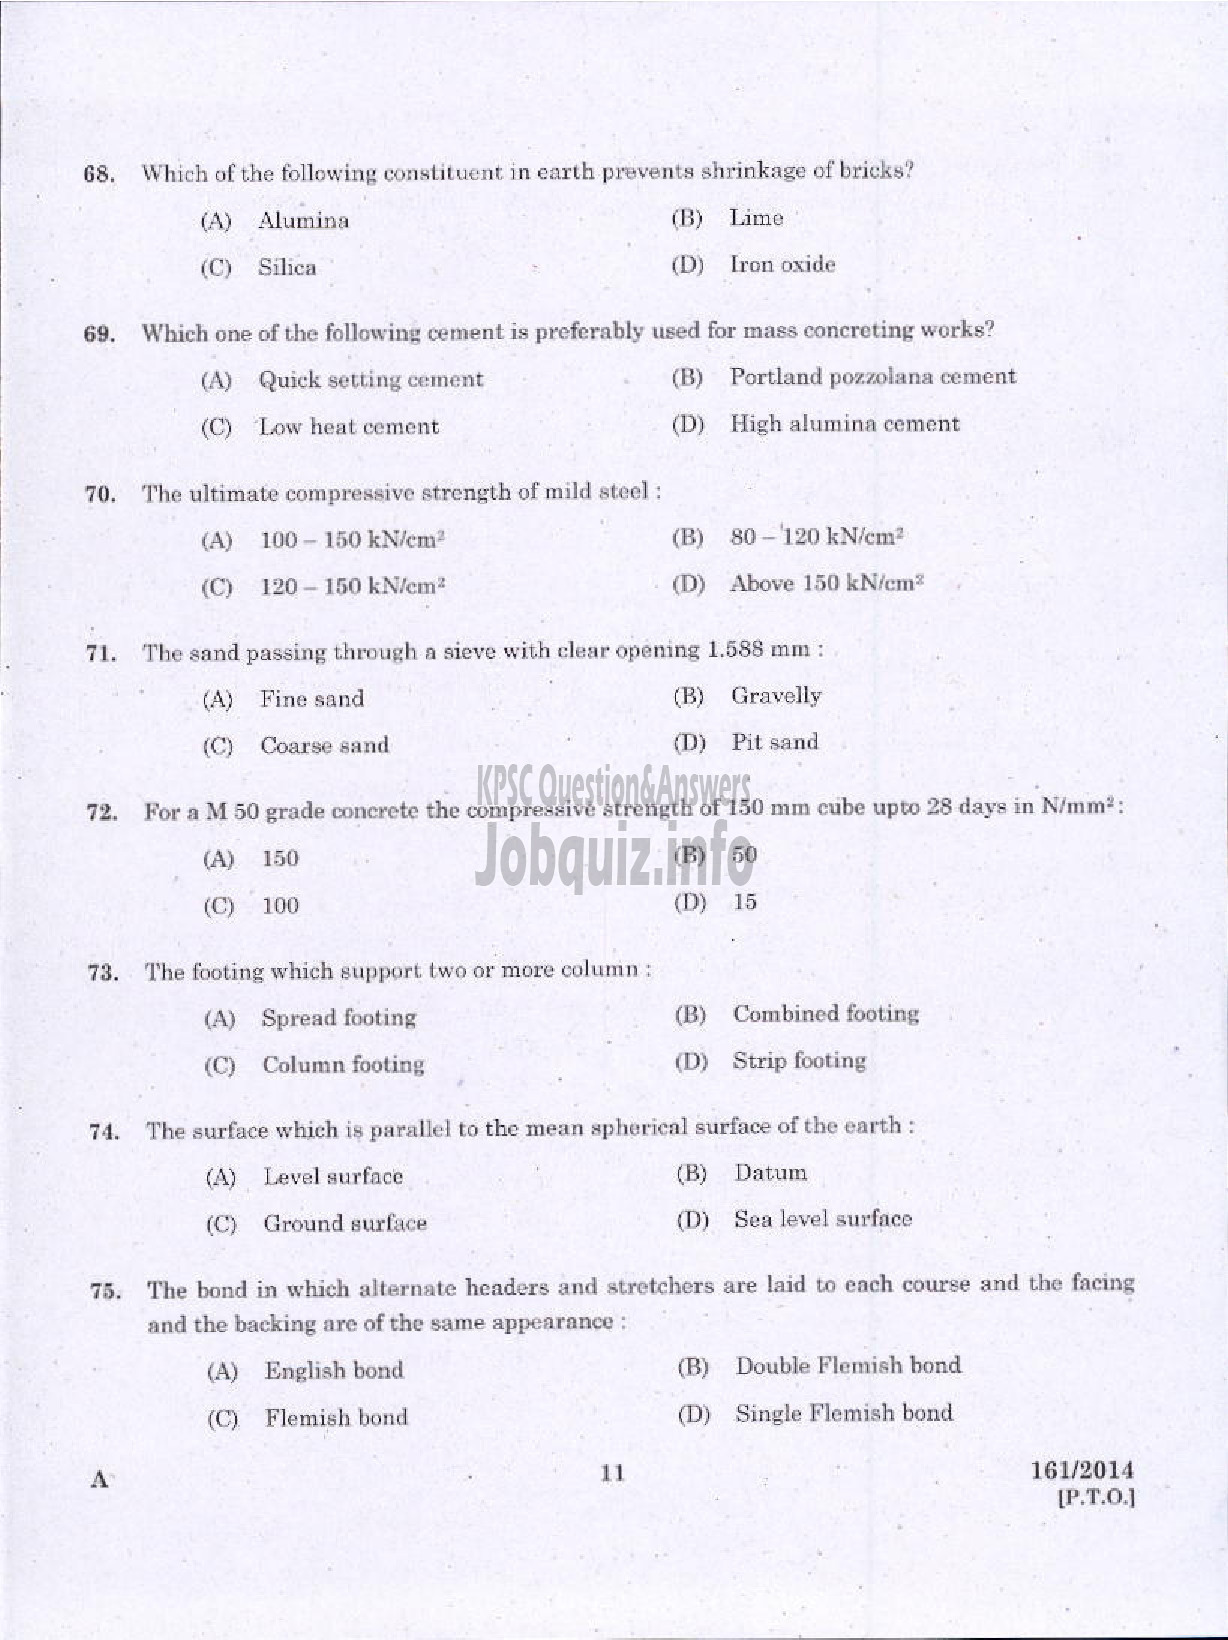 Kerala PSC Question Paper - FIRST GRADE OVERSEER / FIRST GRADE DRAFTSMAN LSGD / OVERSEER CIVIL GRADE II KSIDC-9